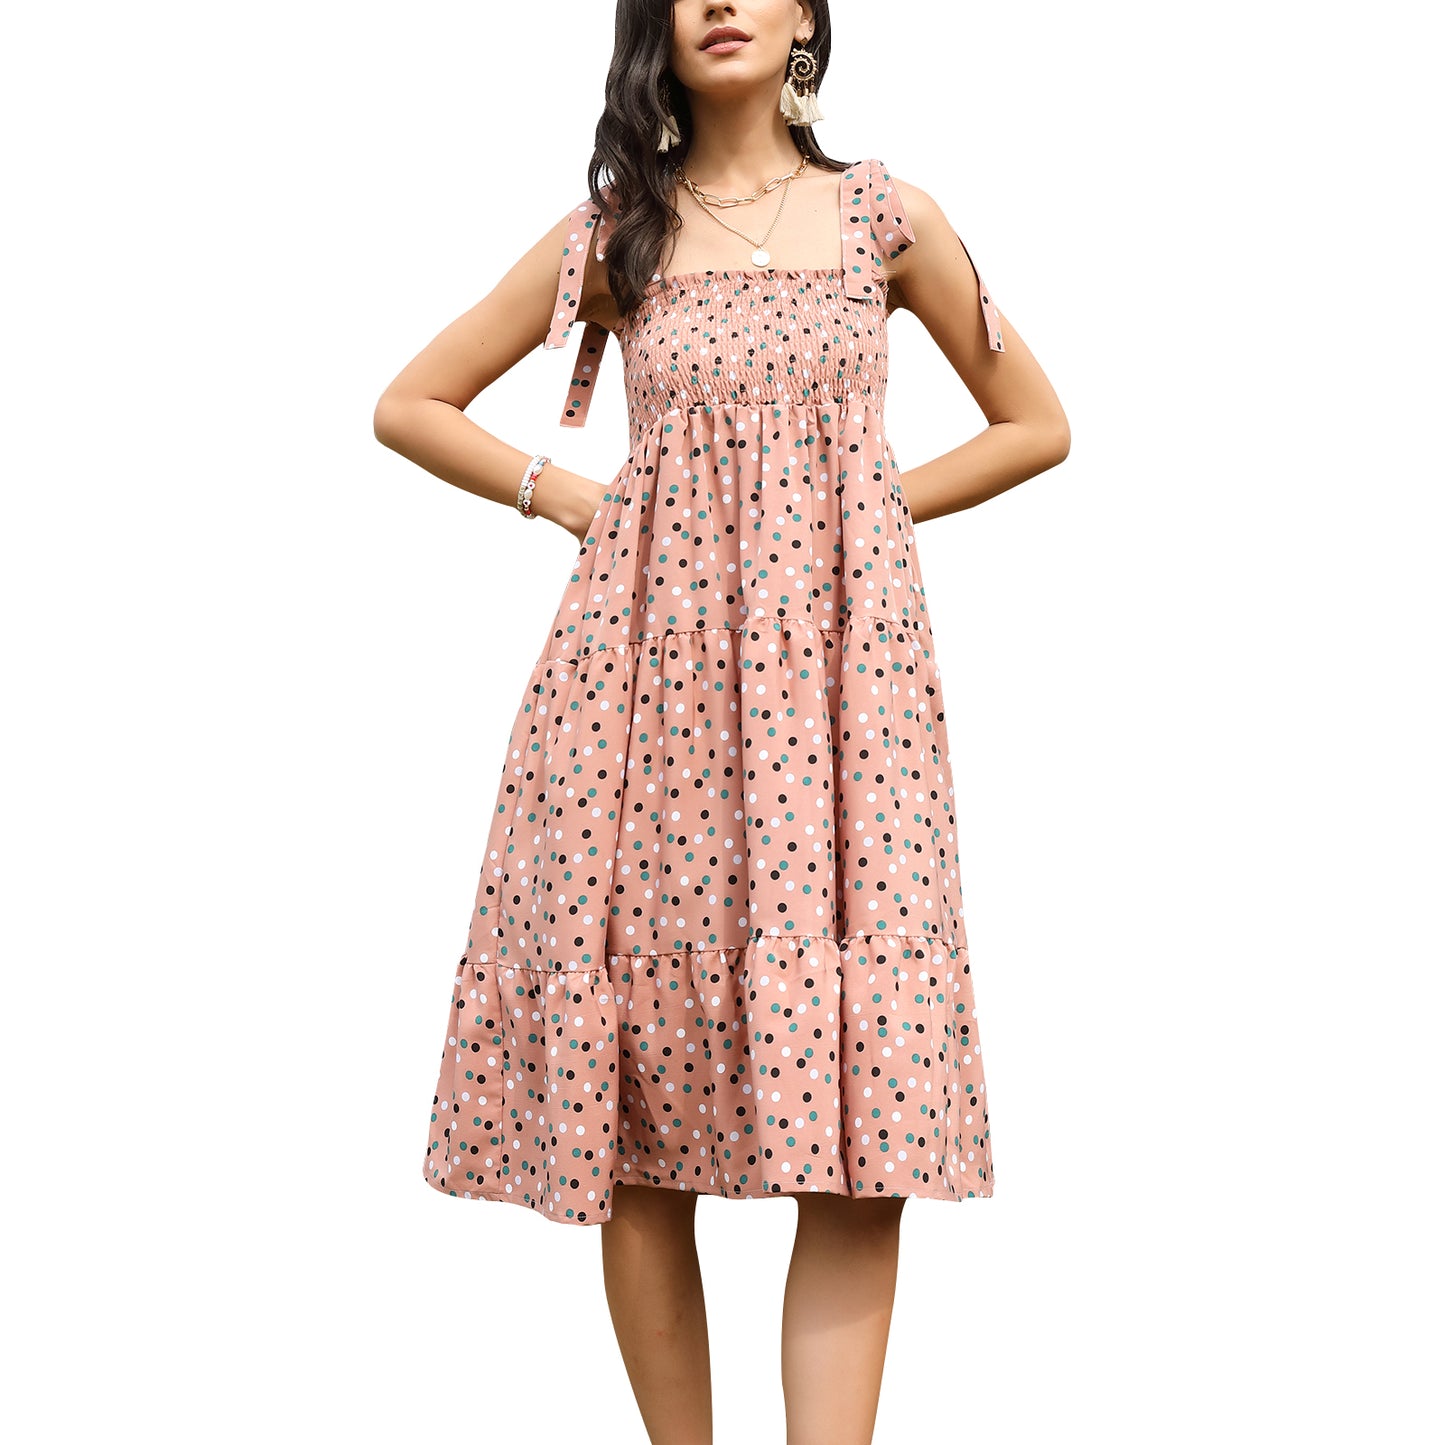 Exlura Women’s Polka Dot Vintage Boho Dress Square neck Smocked Tiered Tie Shoulder Sleeveless Strappy Floral Maxi Dress